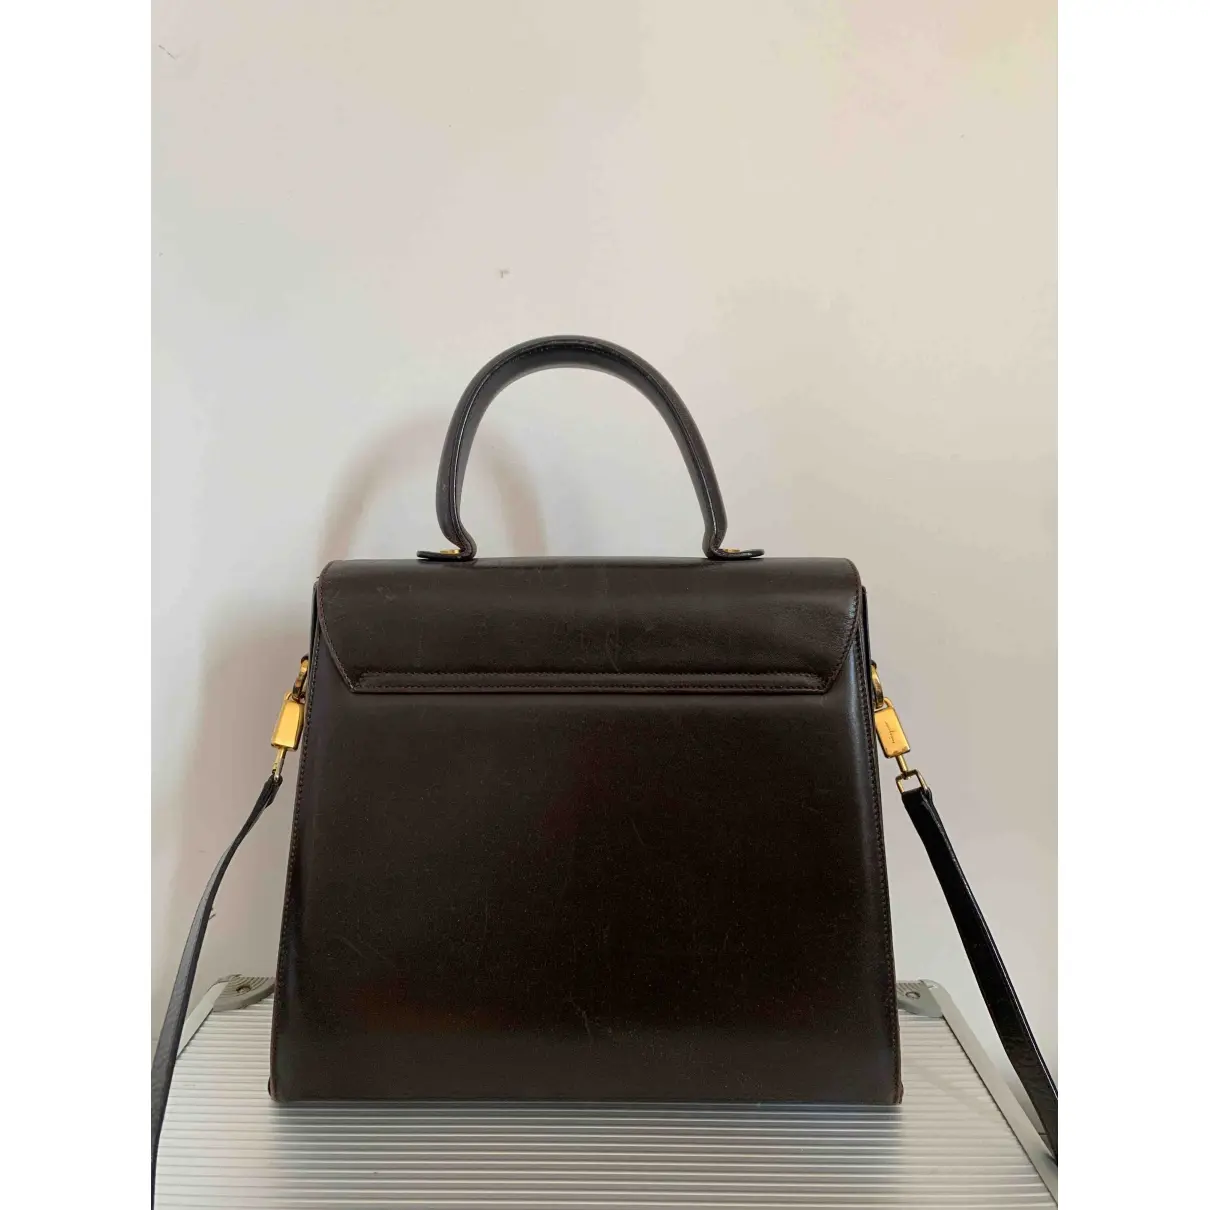 Salvatore Ferragamo Leather handbag for sale - Vintage